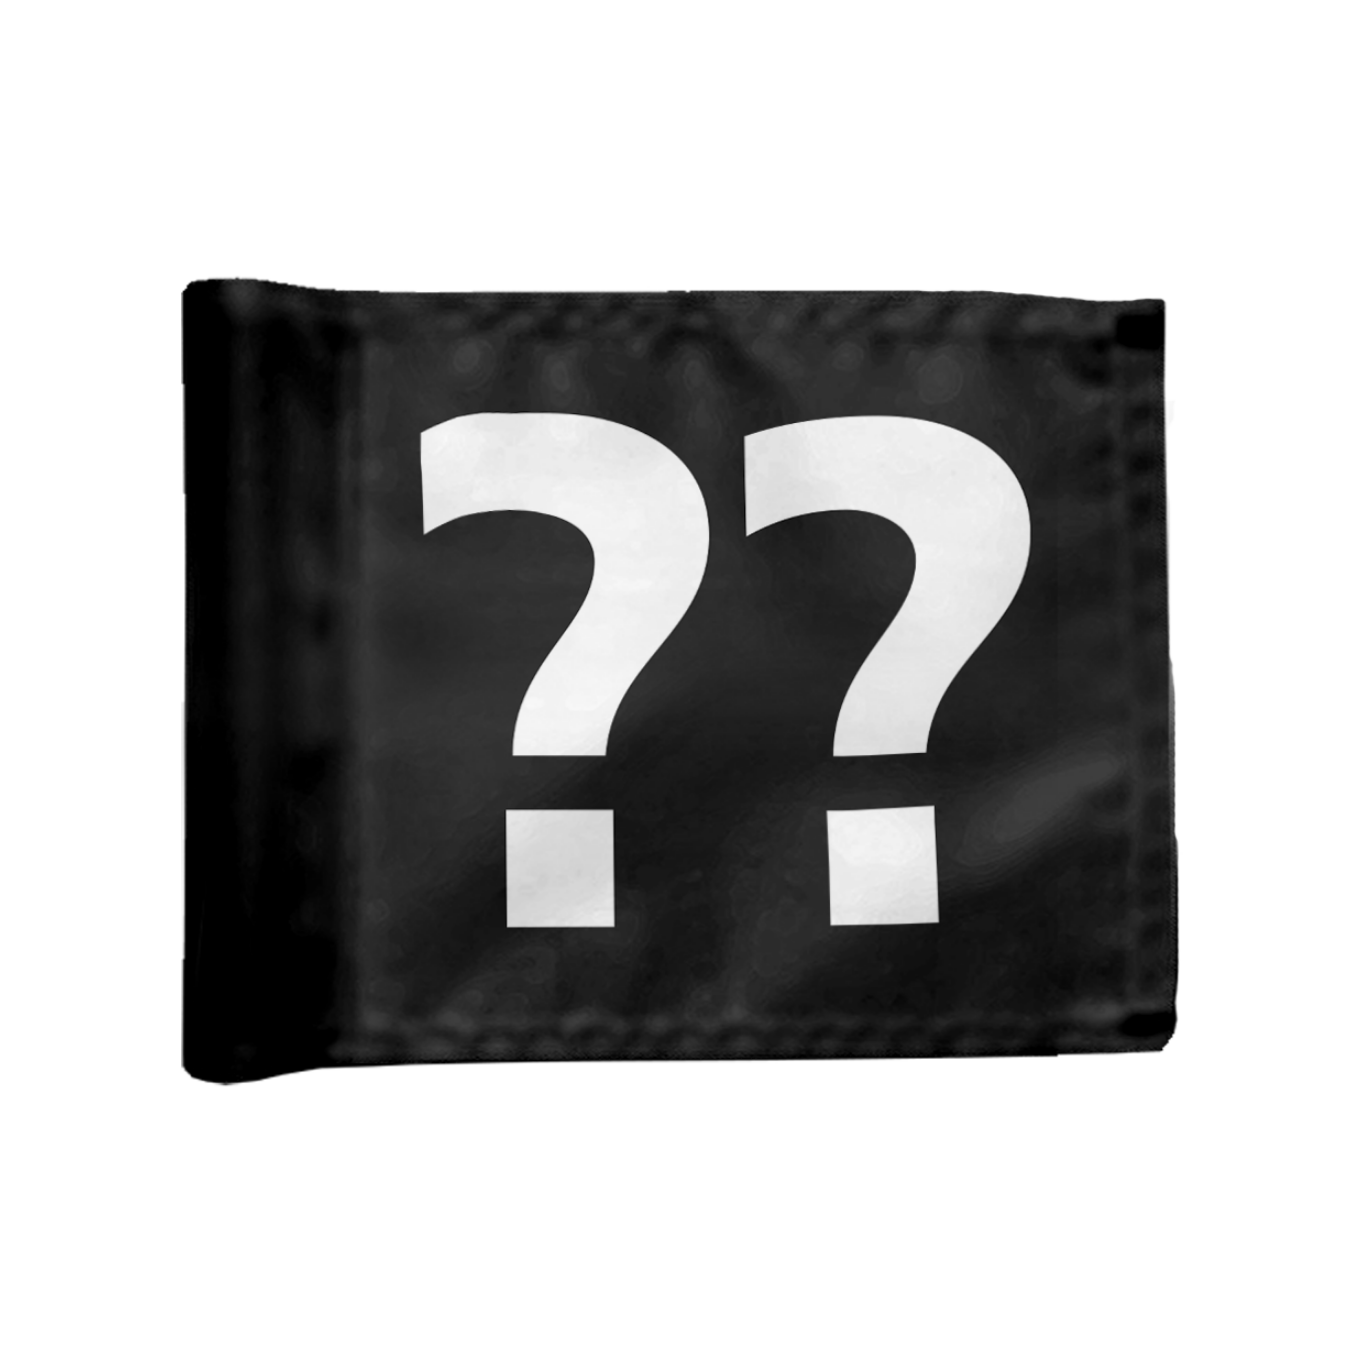 Styckvis Adventure Golf flagga i svart med valfritt hålnummer, styv, 200 gram flaggduk